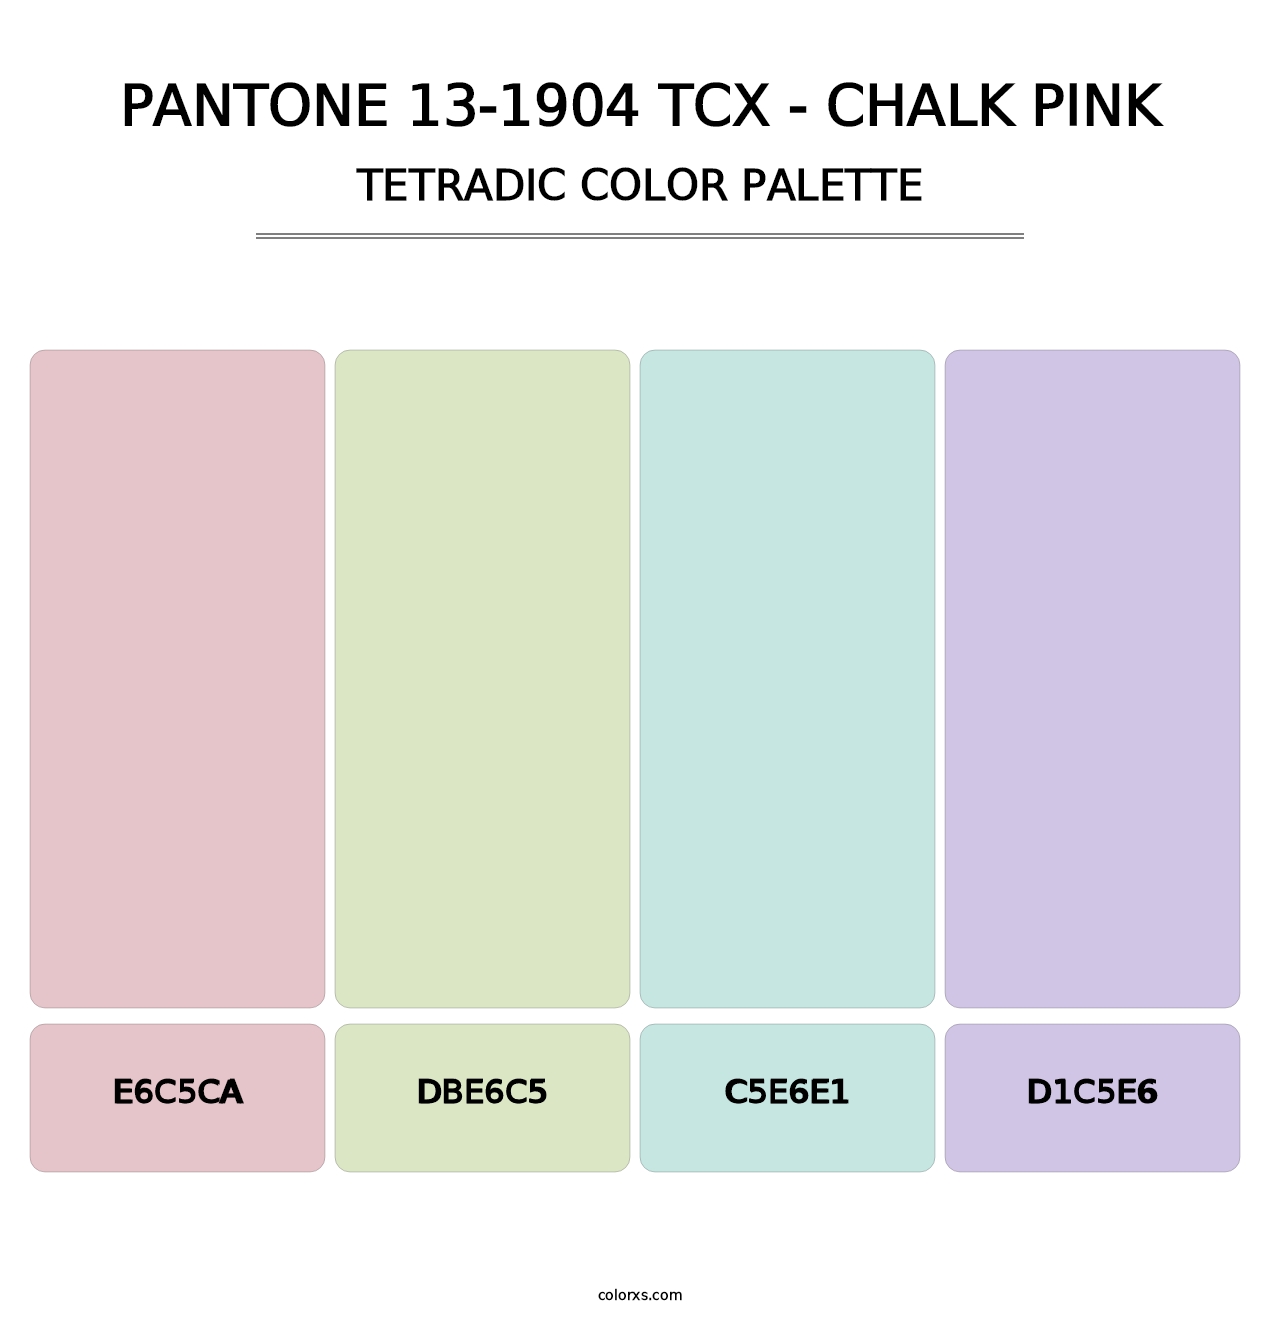 PANTONE 13-1904 TCX - Chalk Pink - Tetradic Color Palette